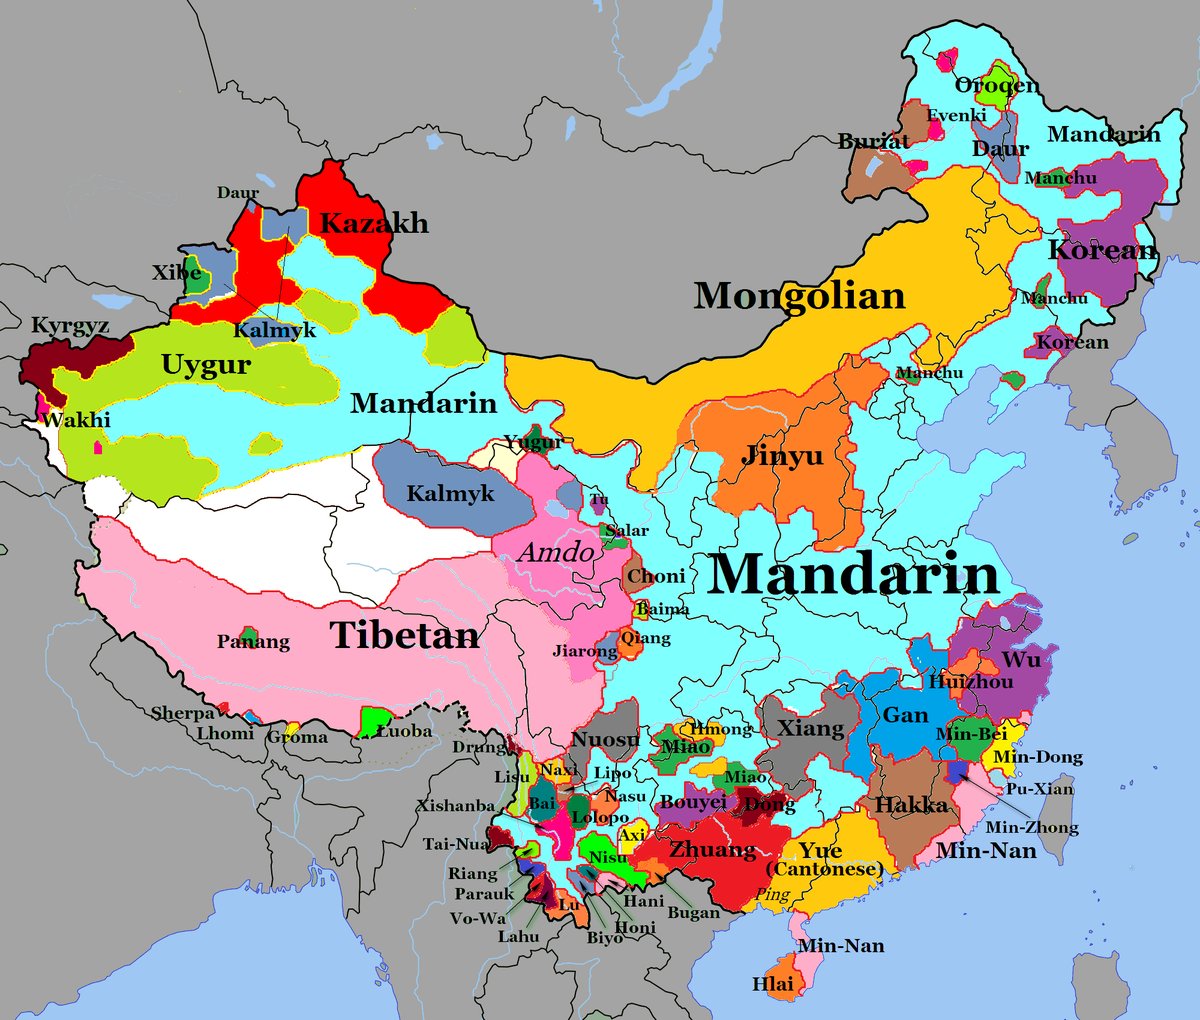 Languages Spoken in China